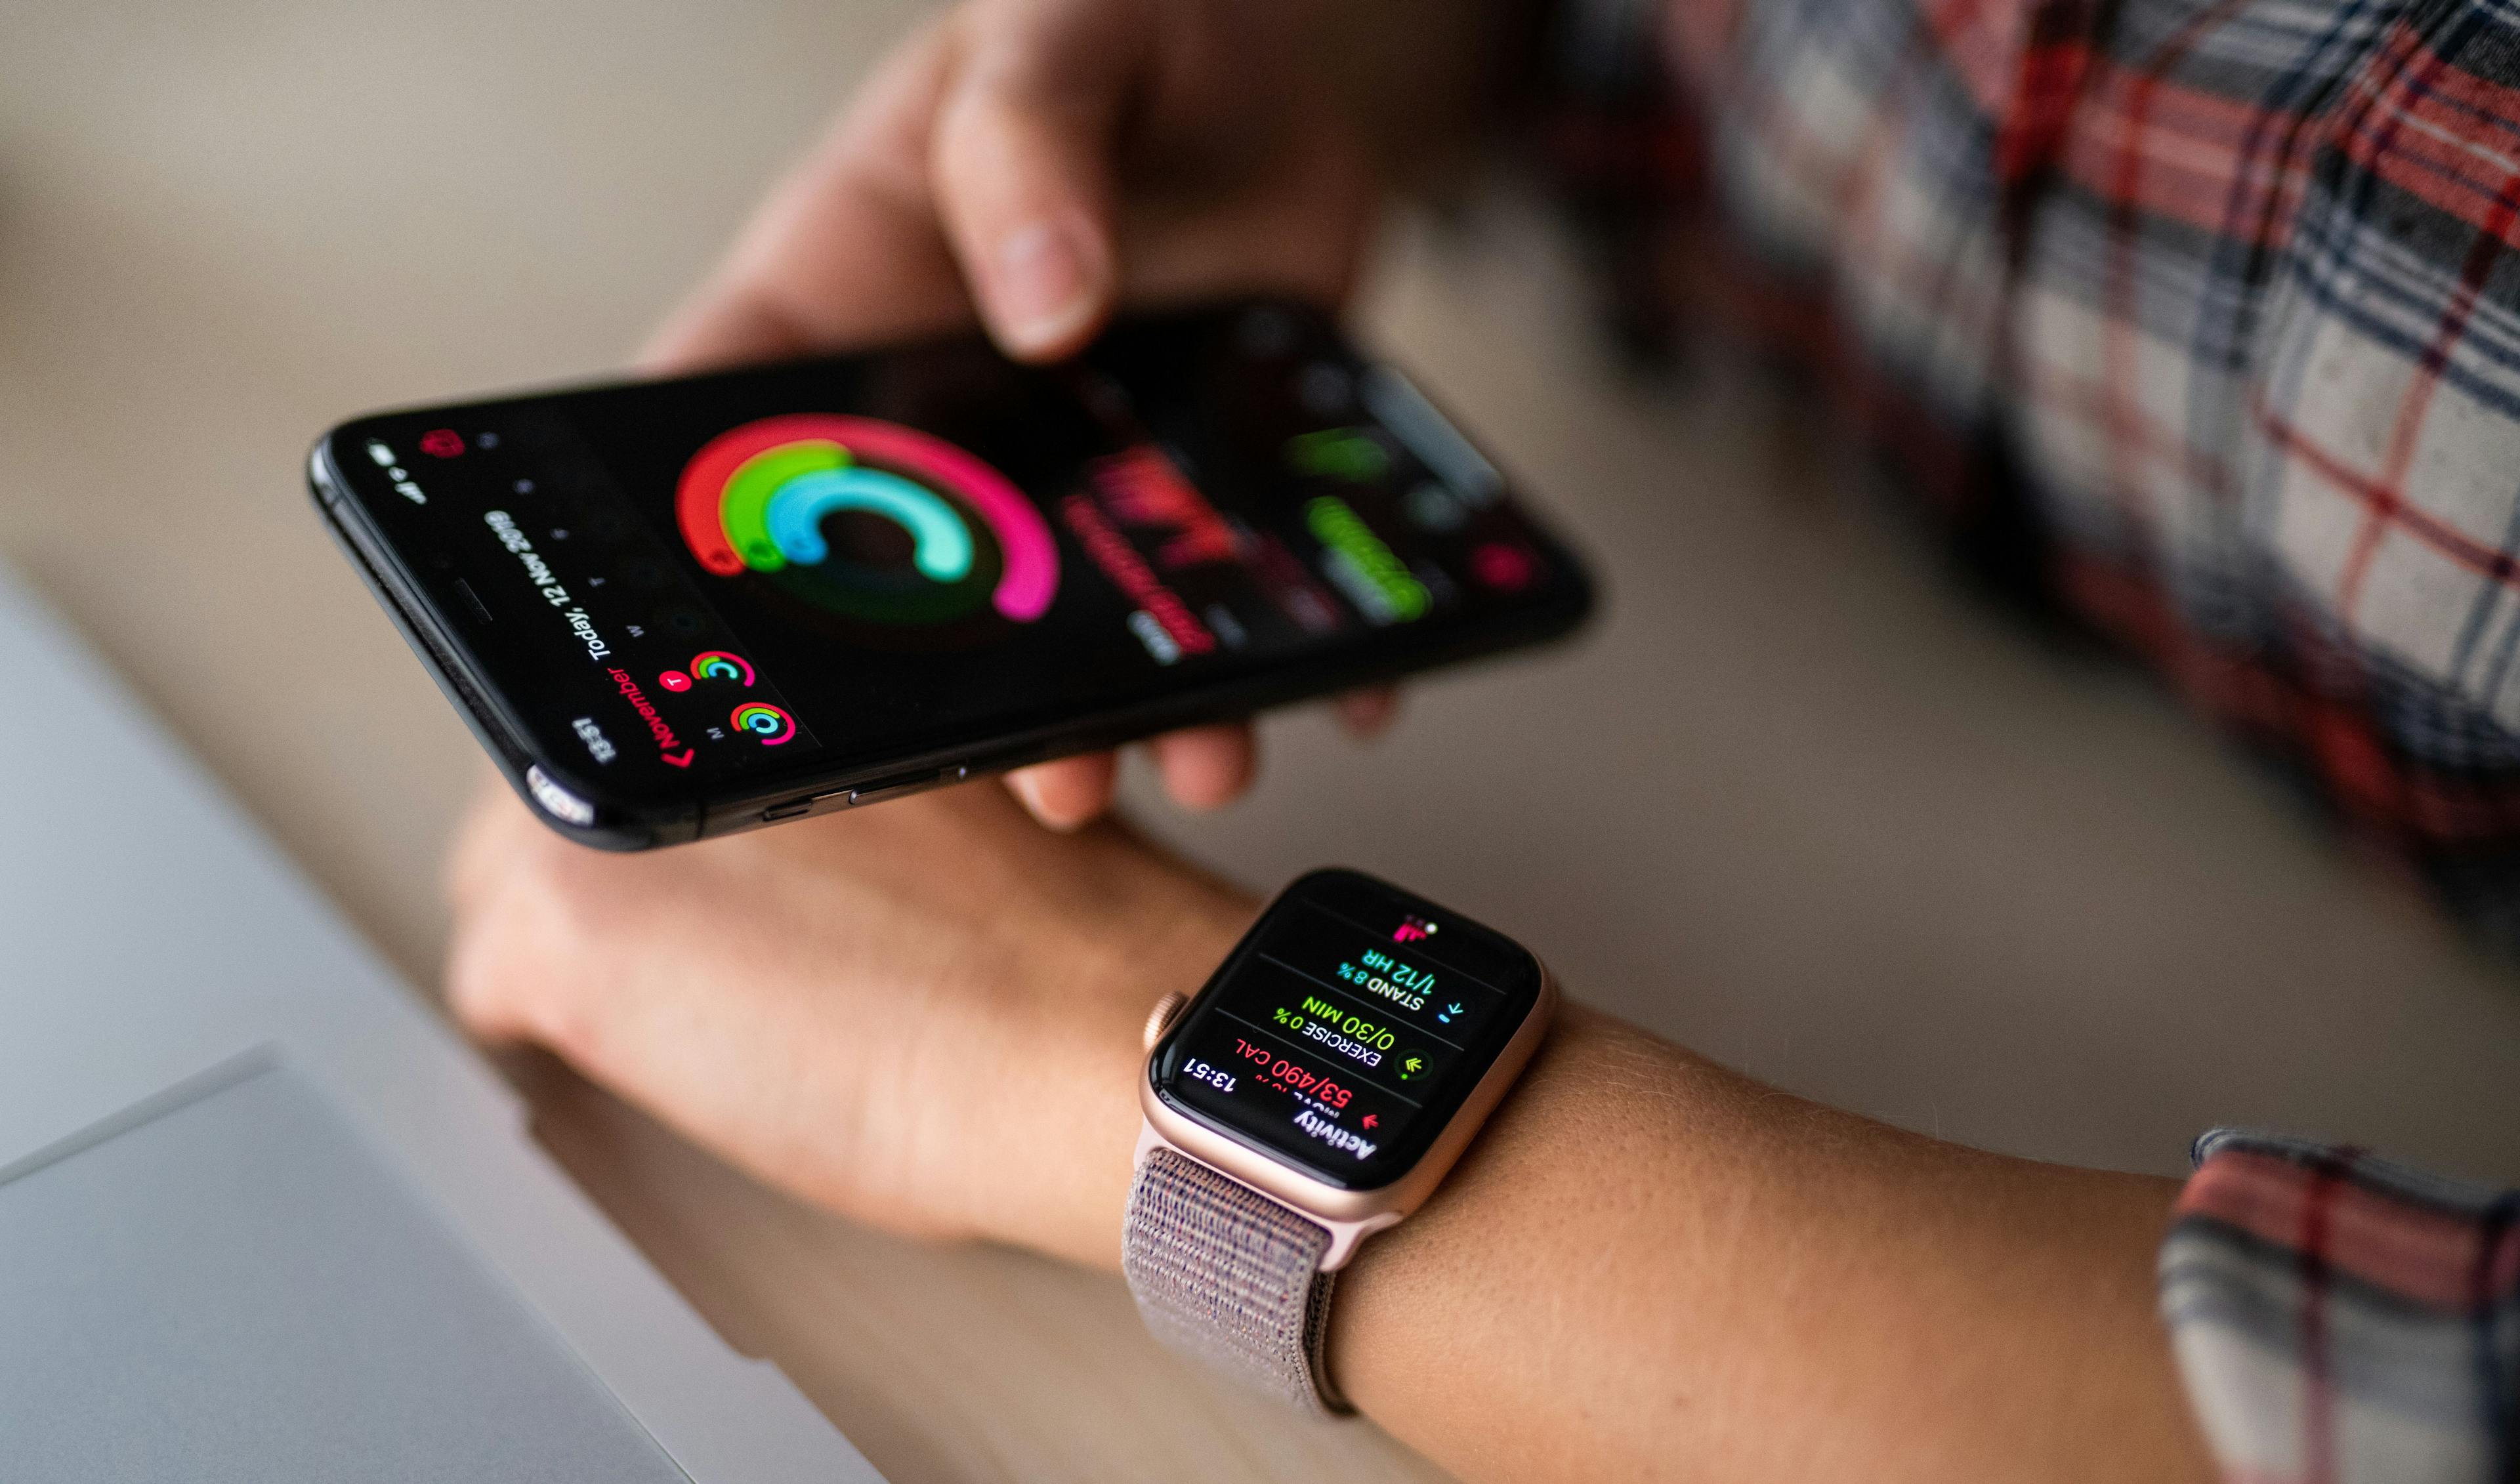 Apple Watch providing health metrics / Halfpoint - stock.adobe.com